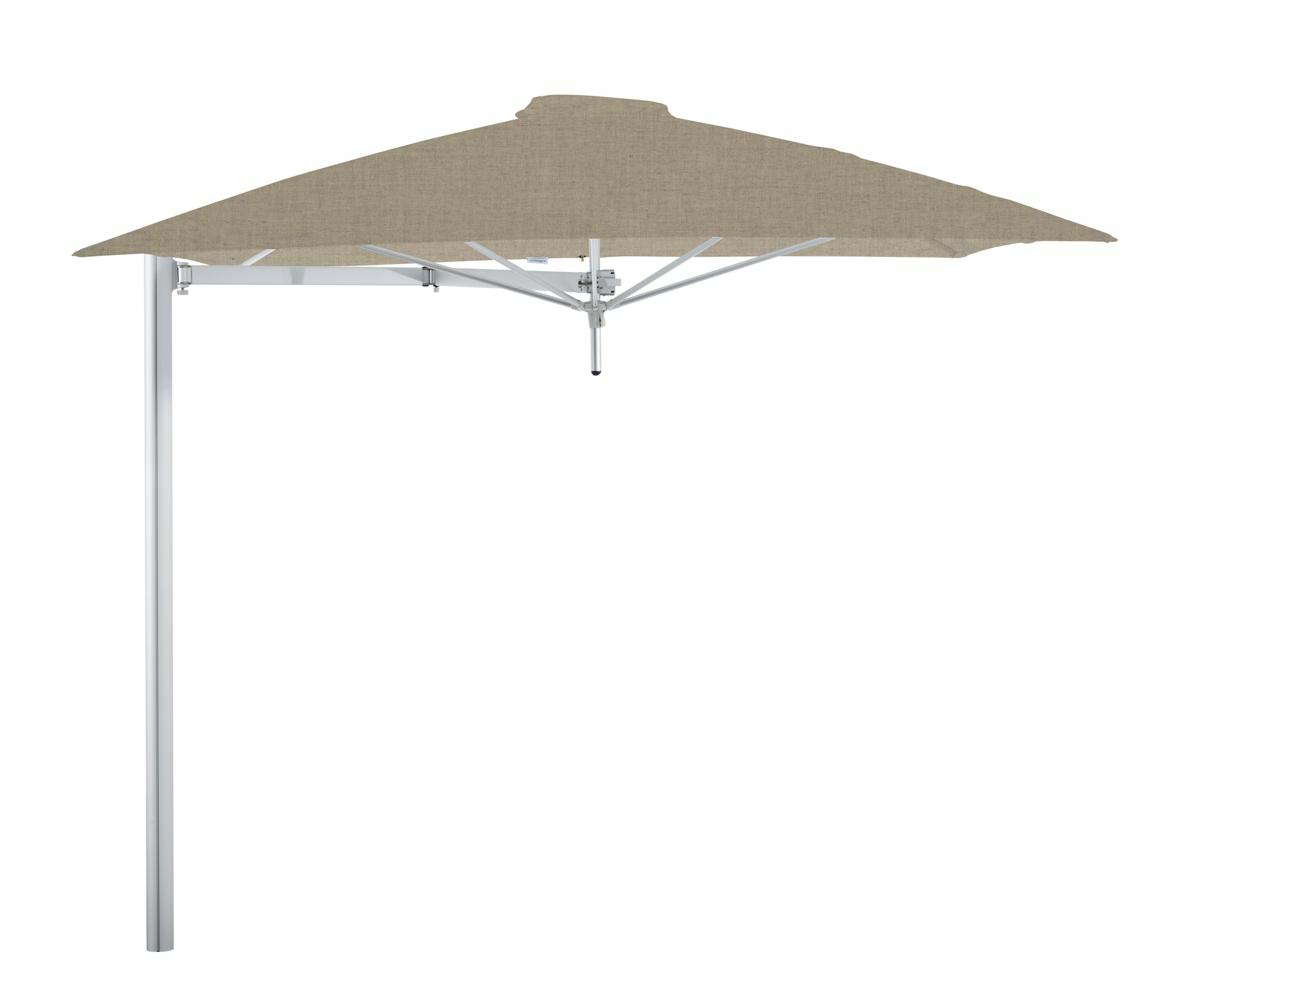 Paraflex cantilever umbrella square 2,3 m with Sand fabric and a Neo arm